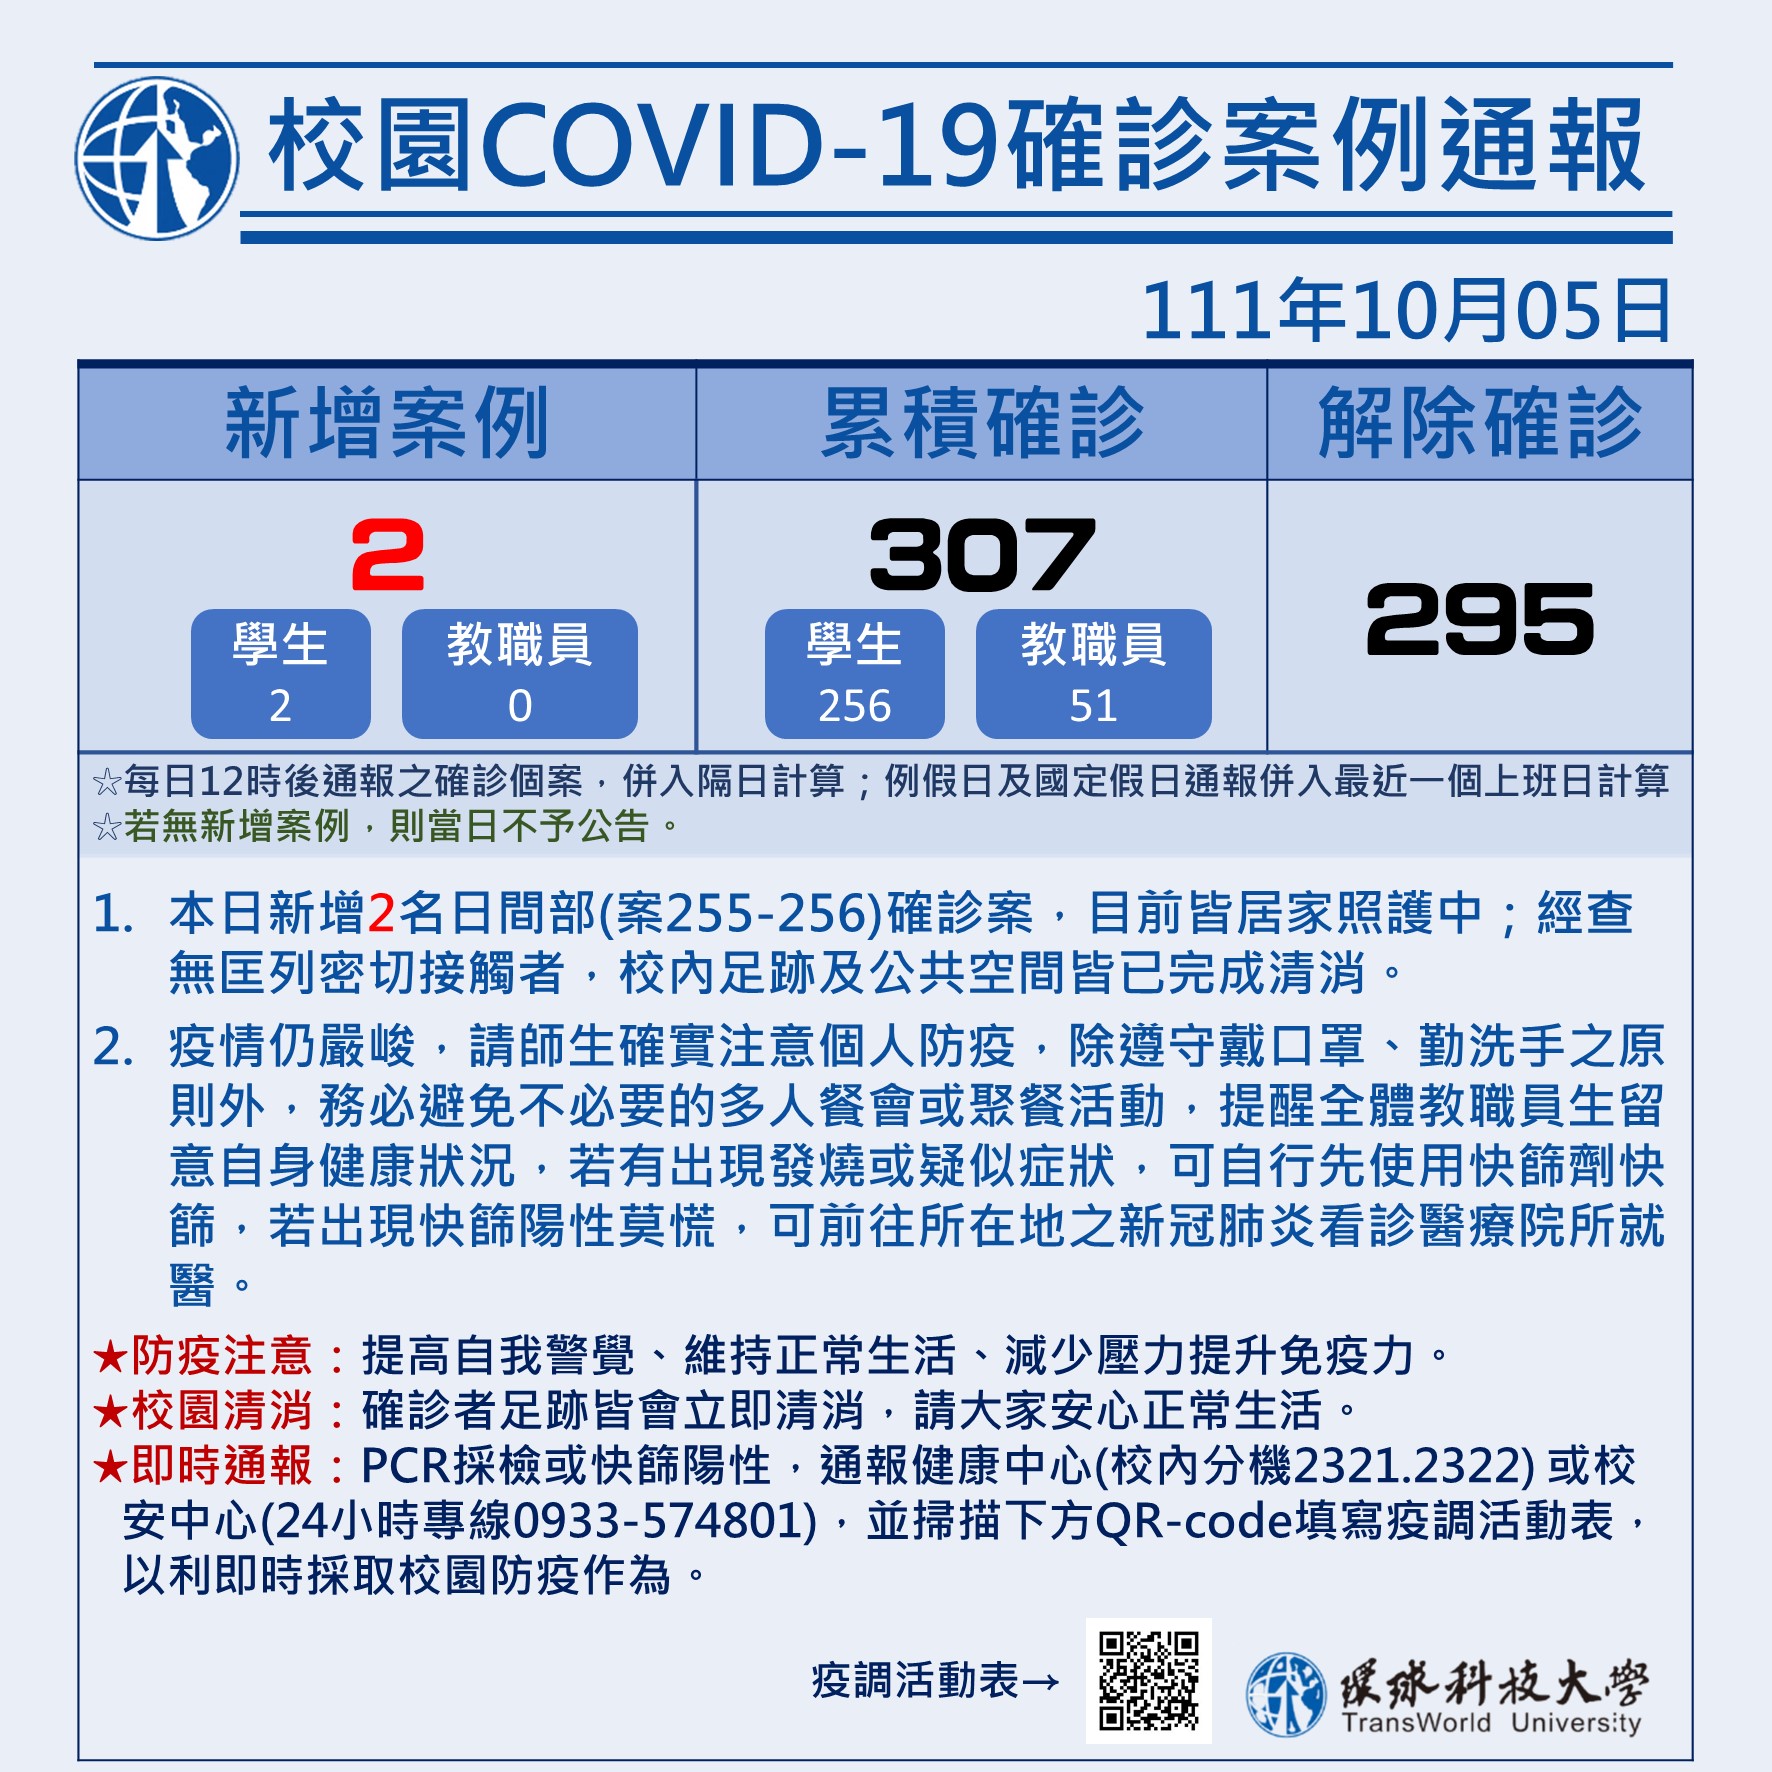 校園COVID-19案例統計1005